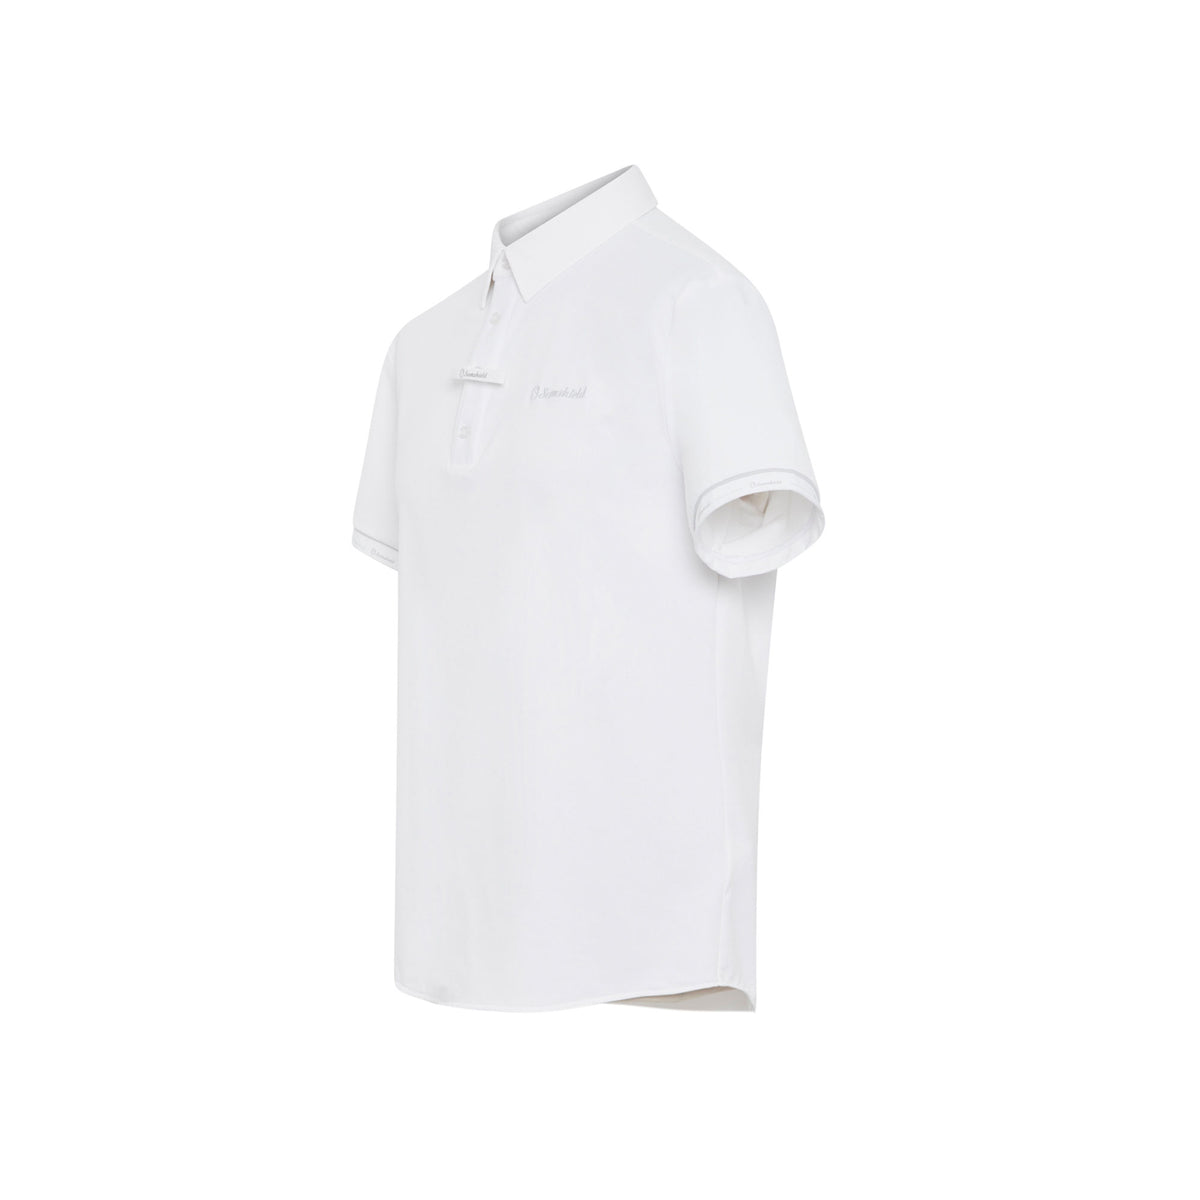 Samshield Men's Arthur Short Sleeve Shirt